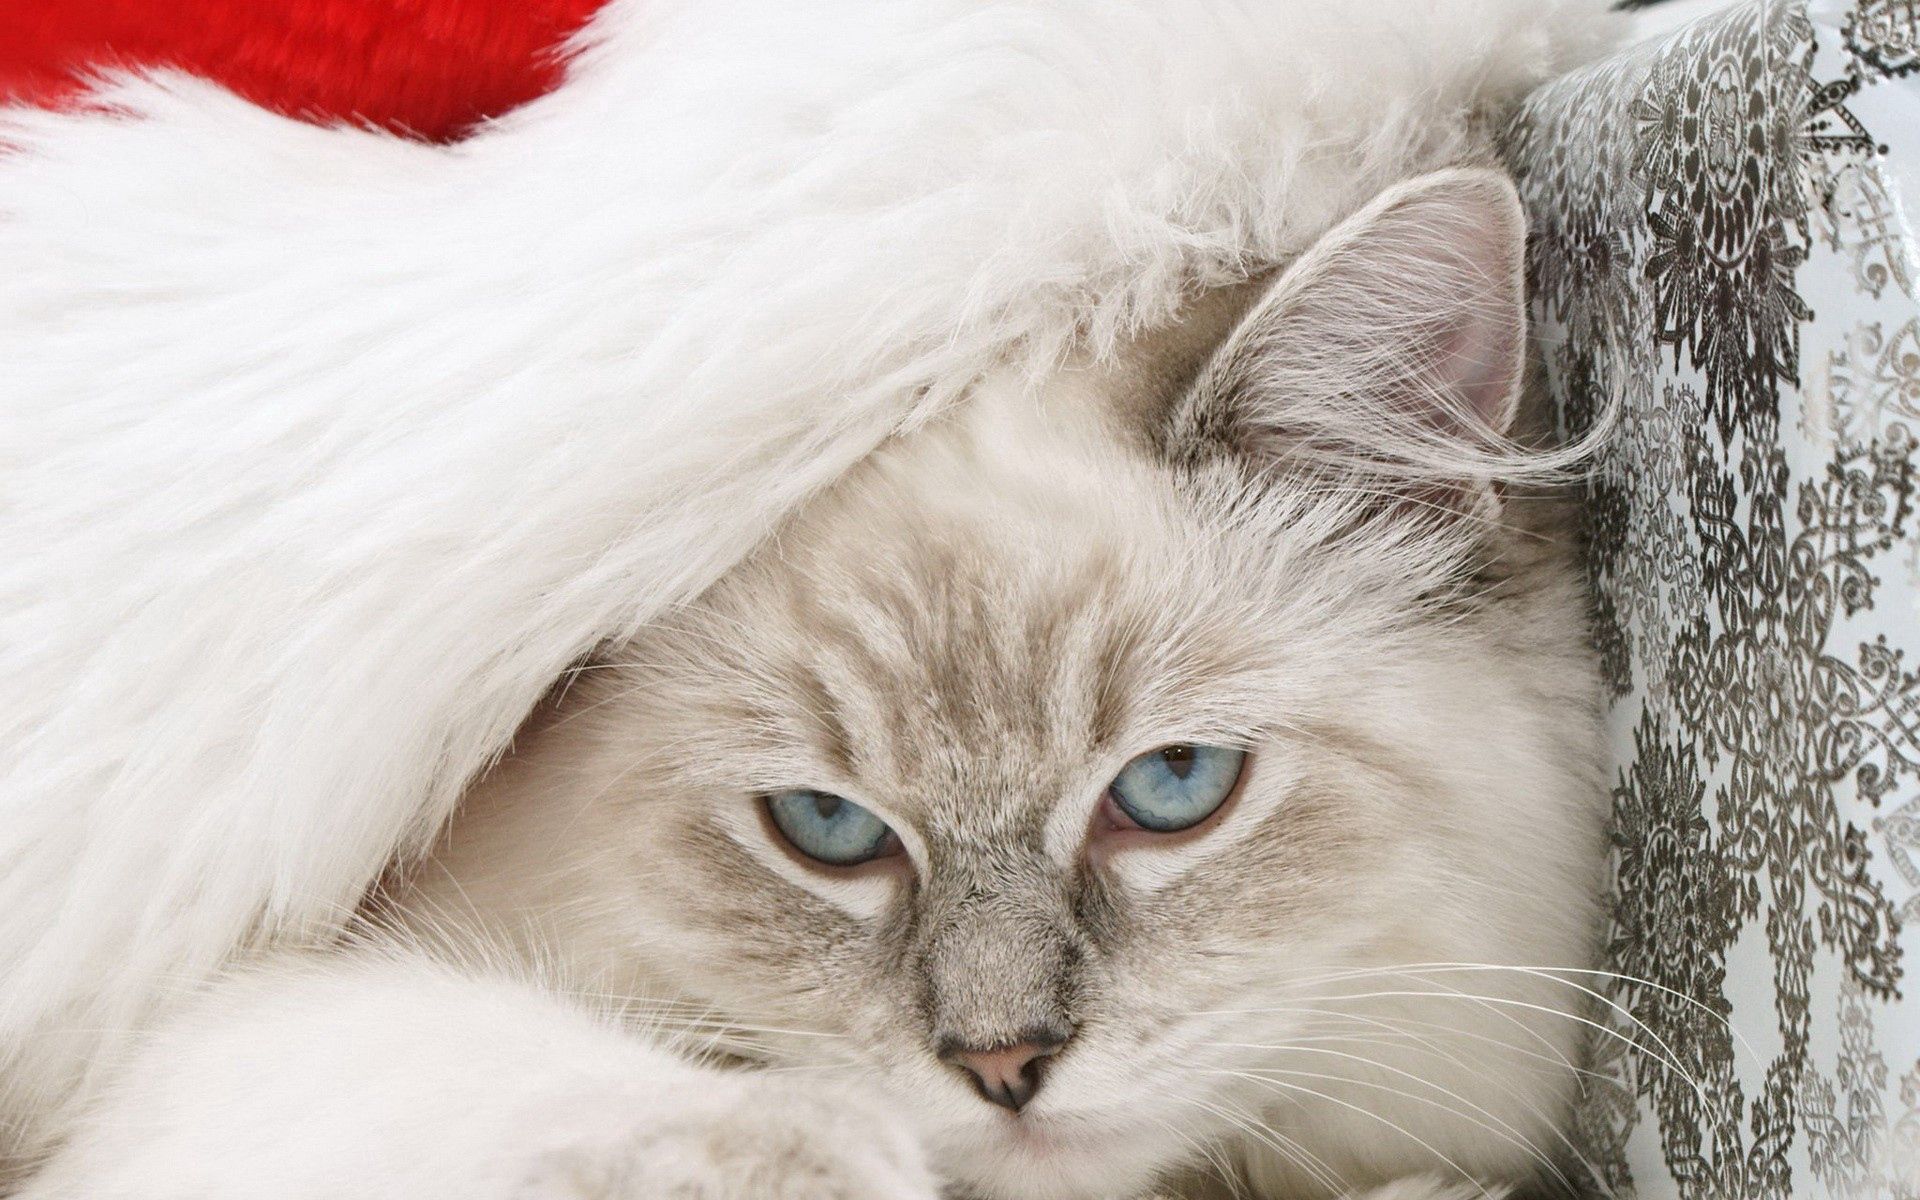 animals, new year, cat, fluffy, muzzle, santa claus hat, santa's hat, festive